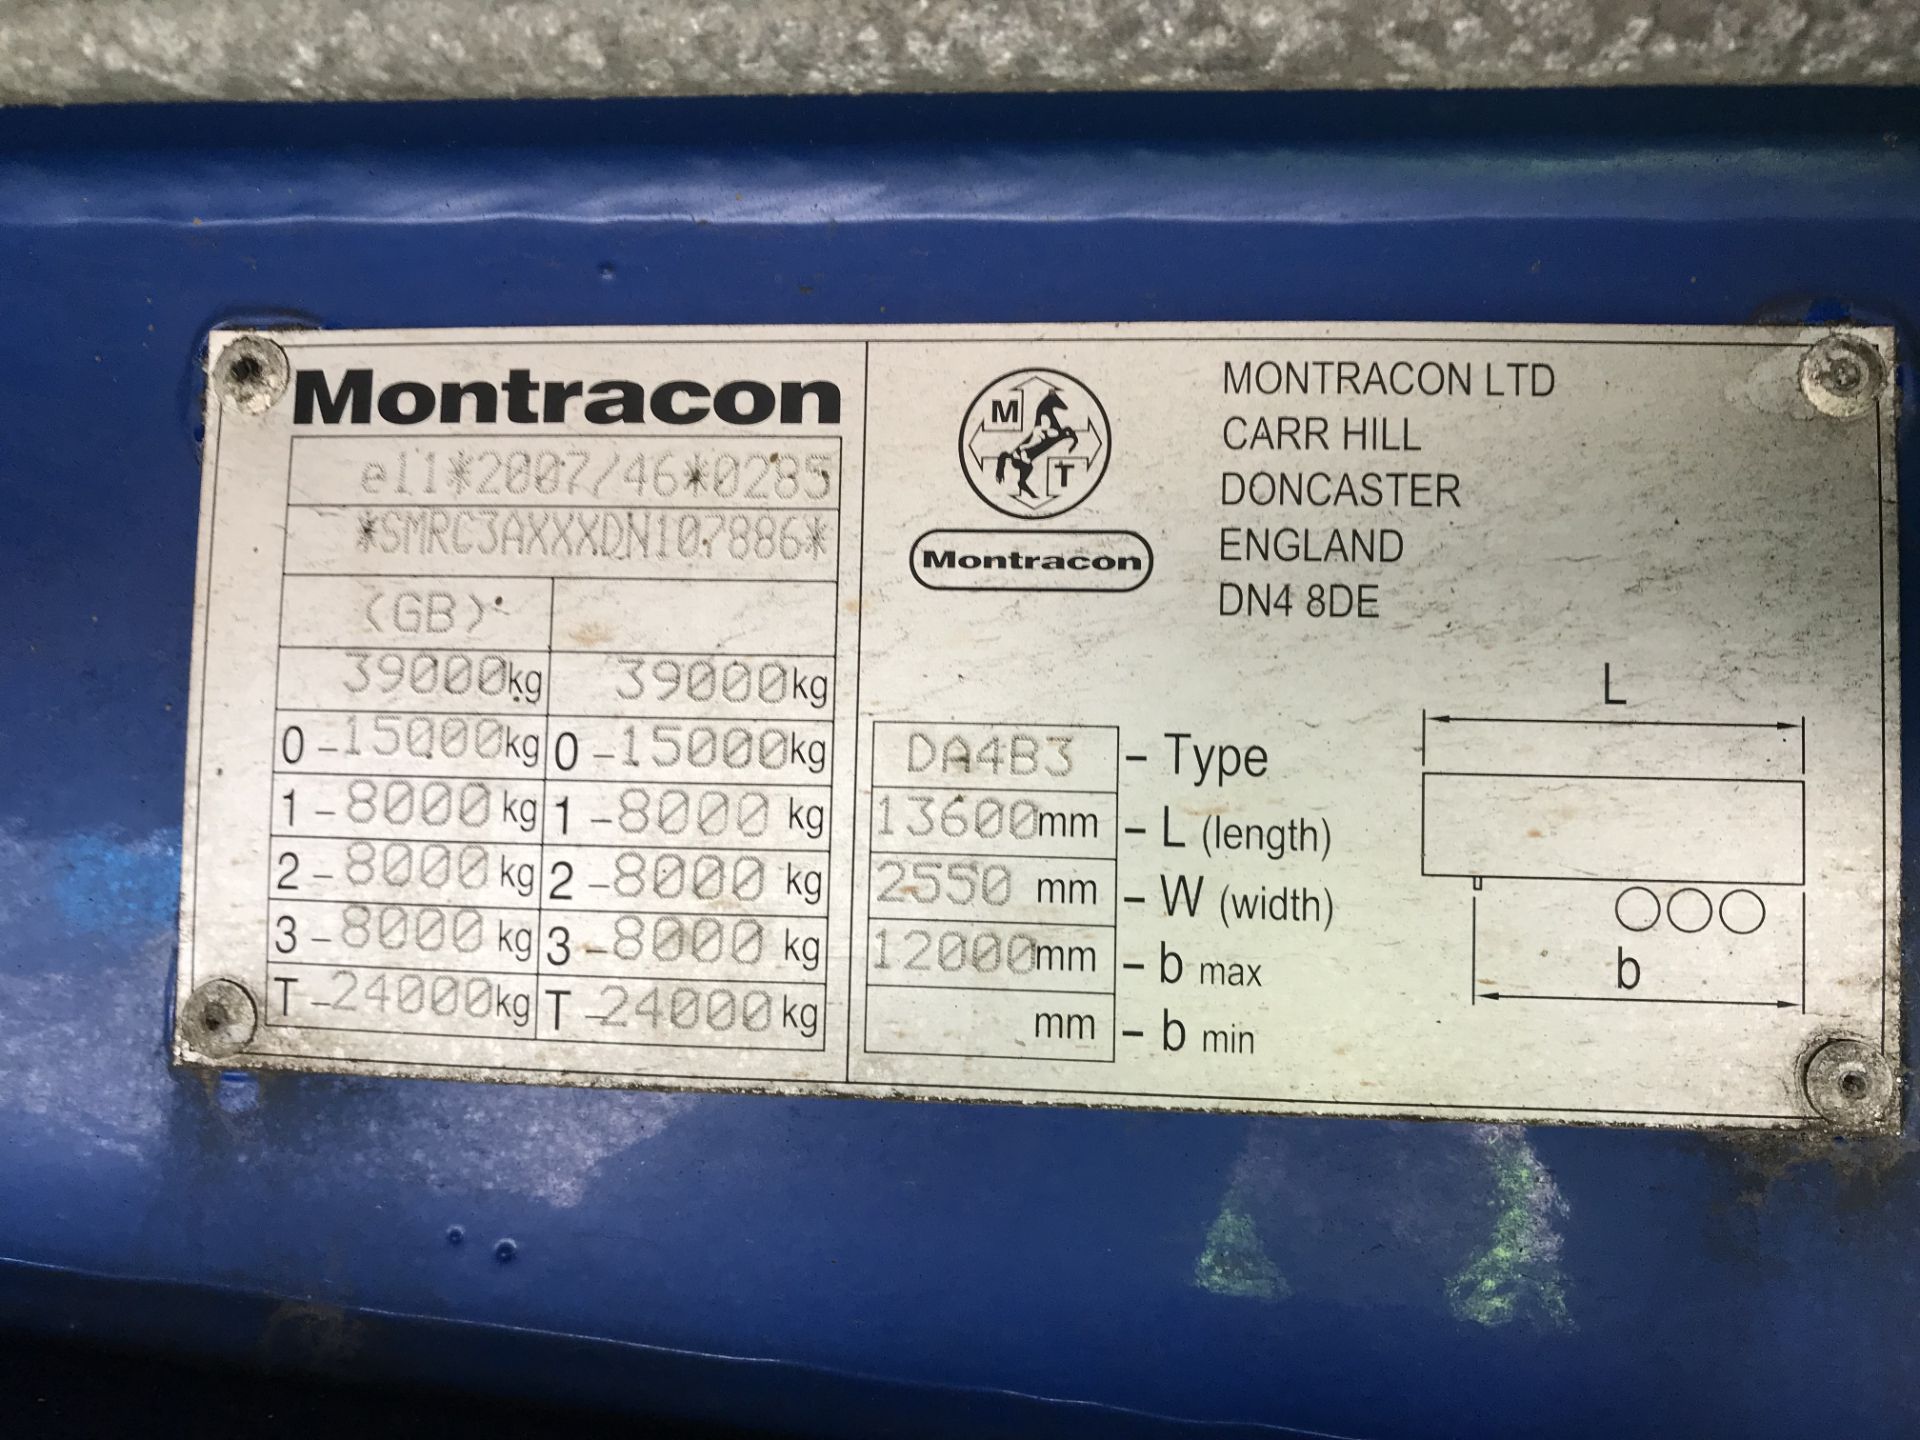 Montracon 13.6m Tri-Axle Curtainside Single Deck Semi-Trailer, chassis no. SMRC3AXXXDN107886, ID no. - Image 6 of 6